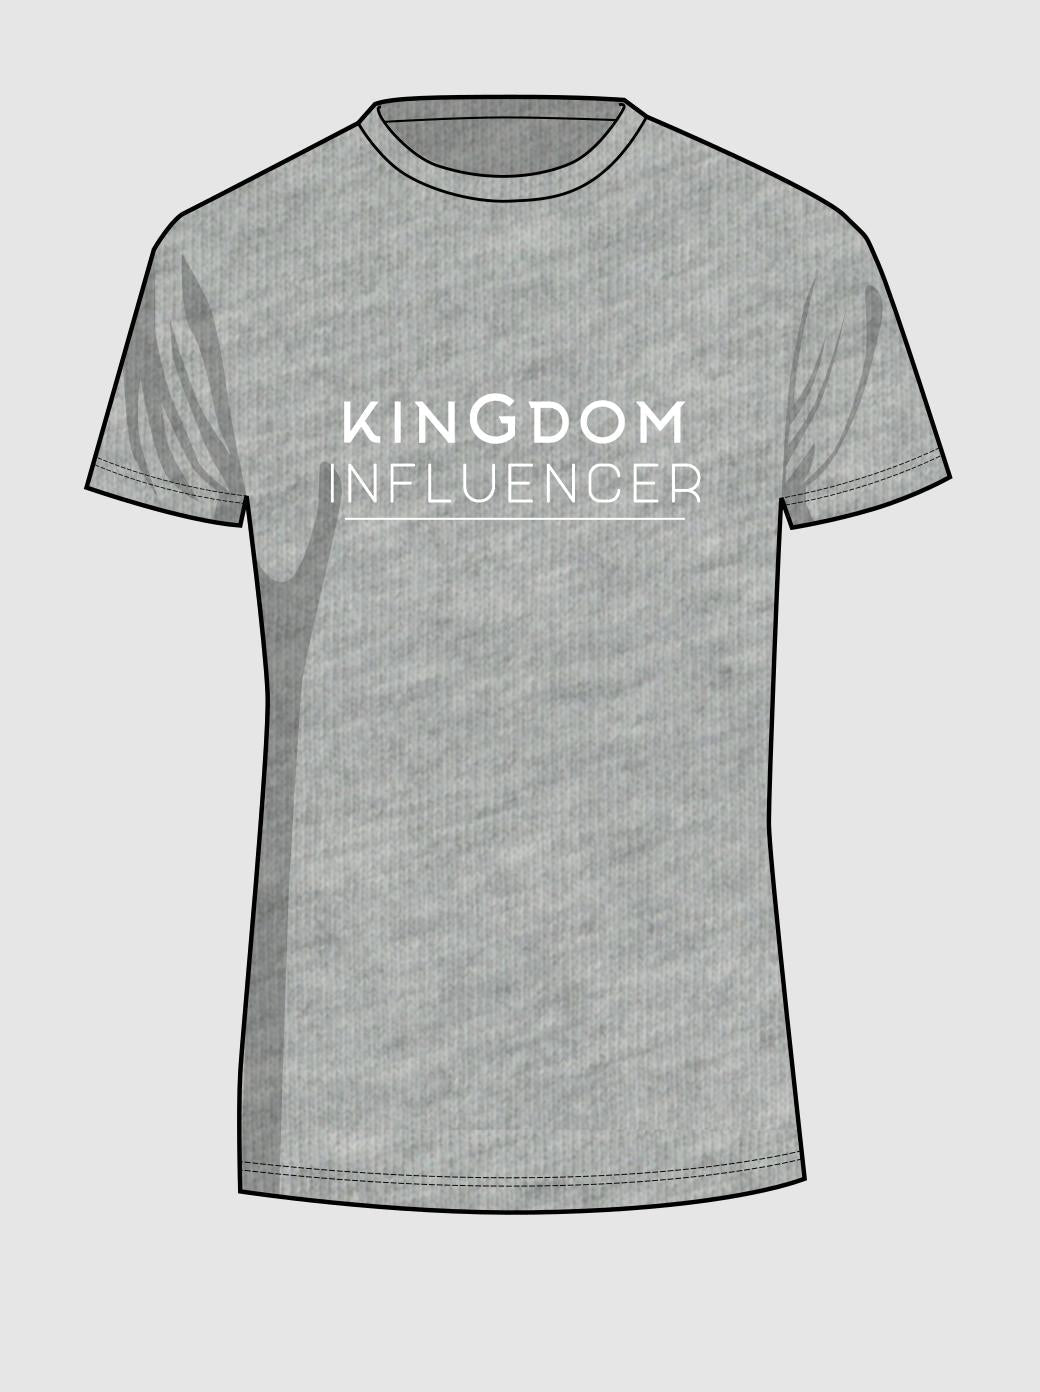 Männer T-Shirt - Kingdom Influencer